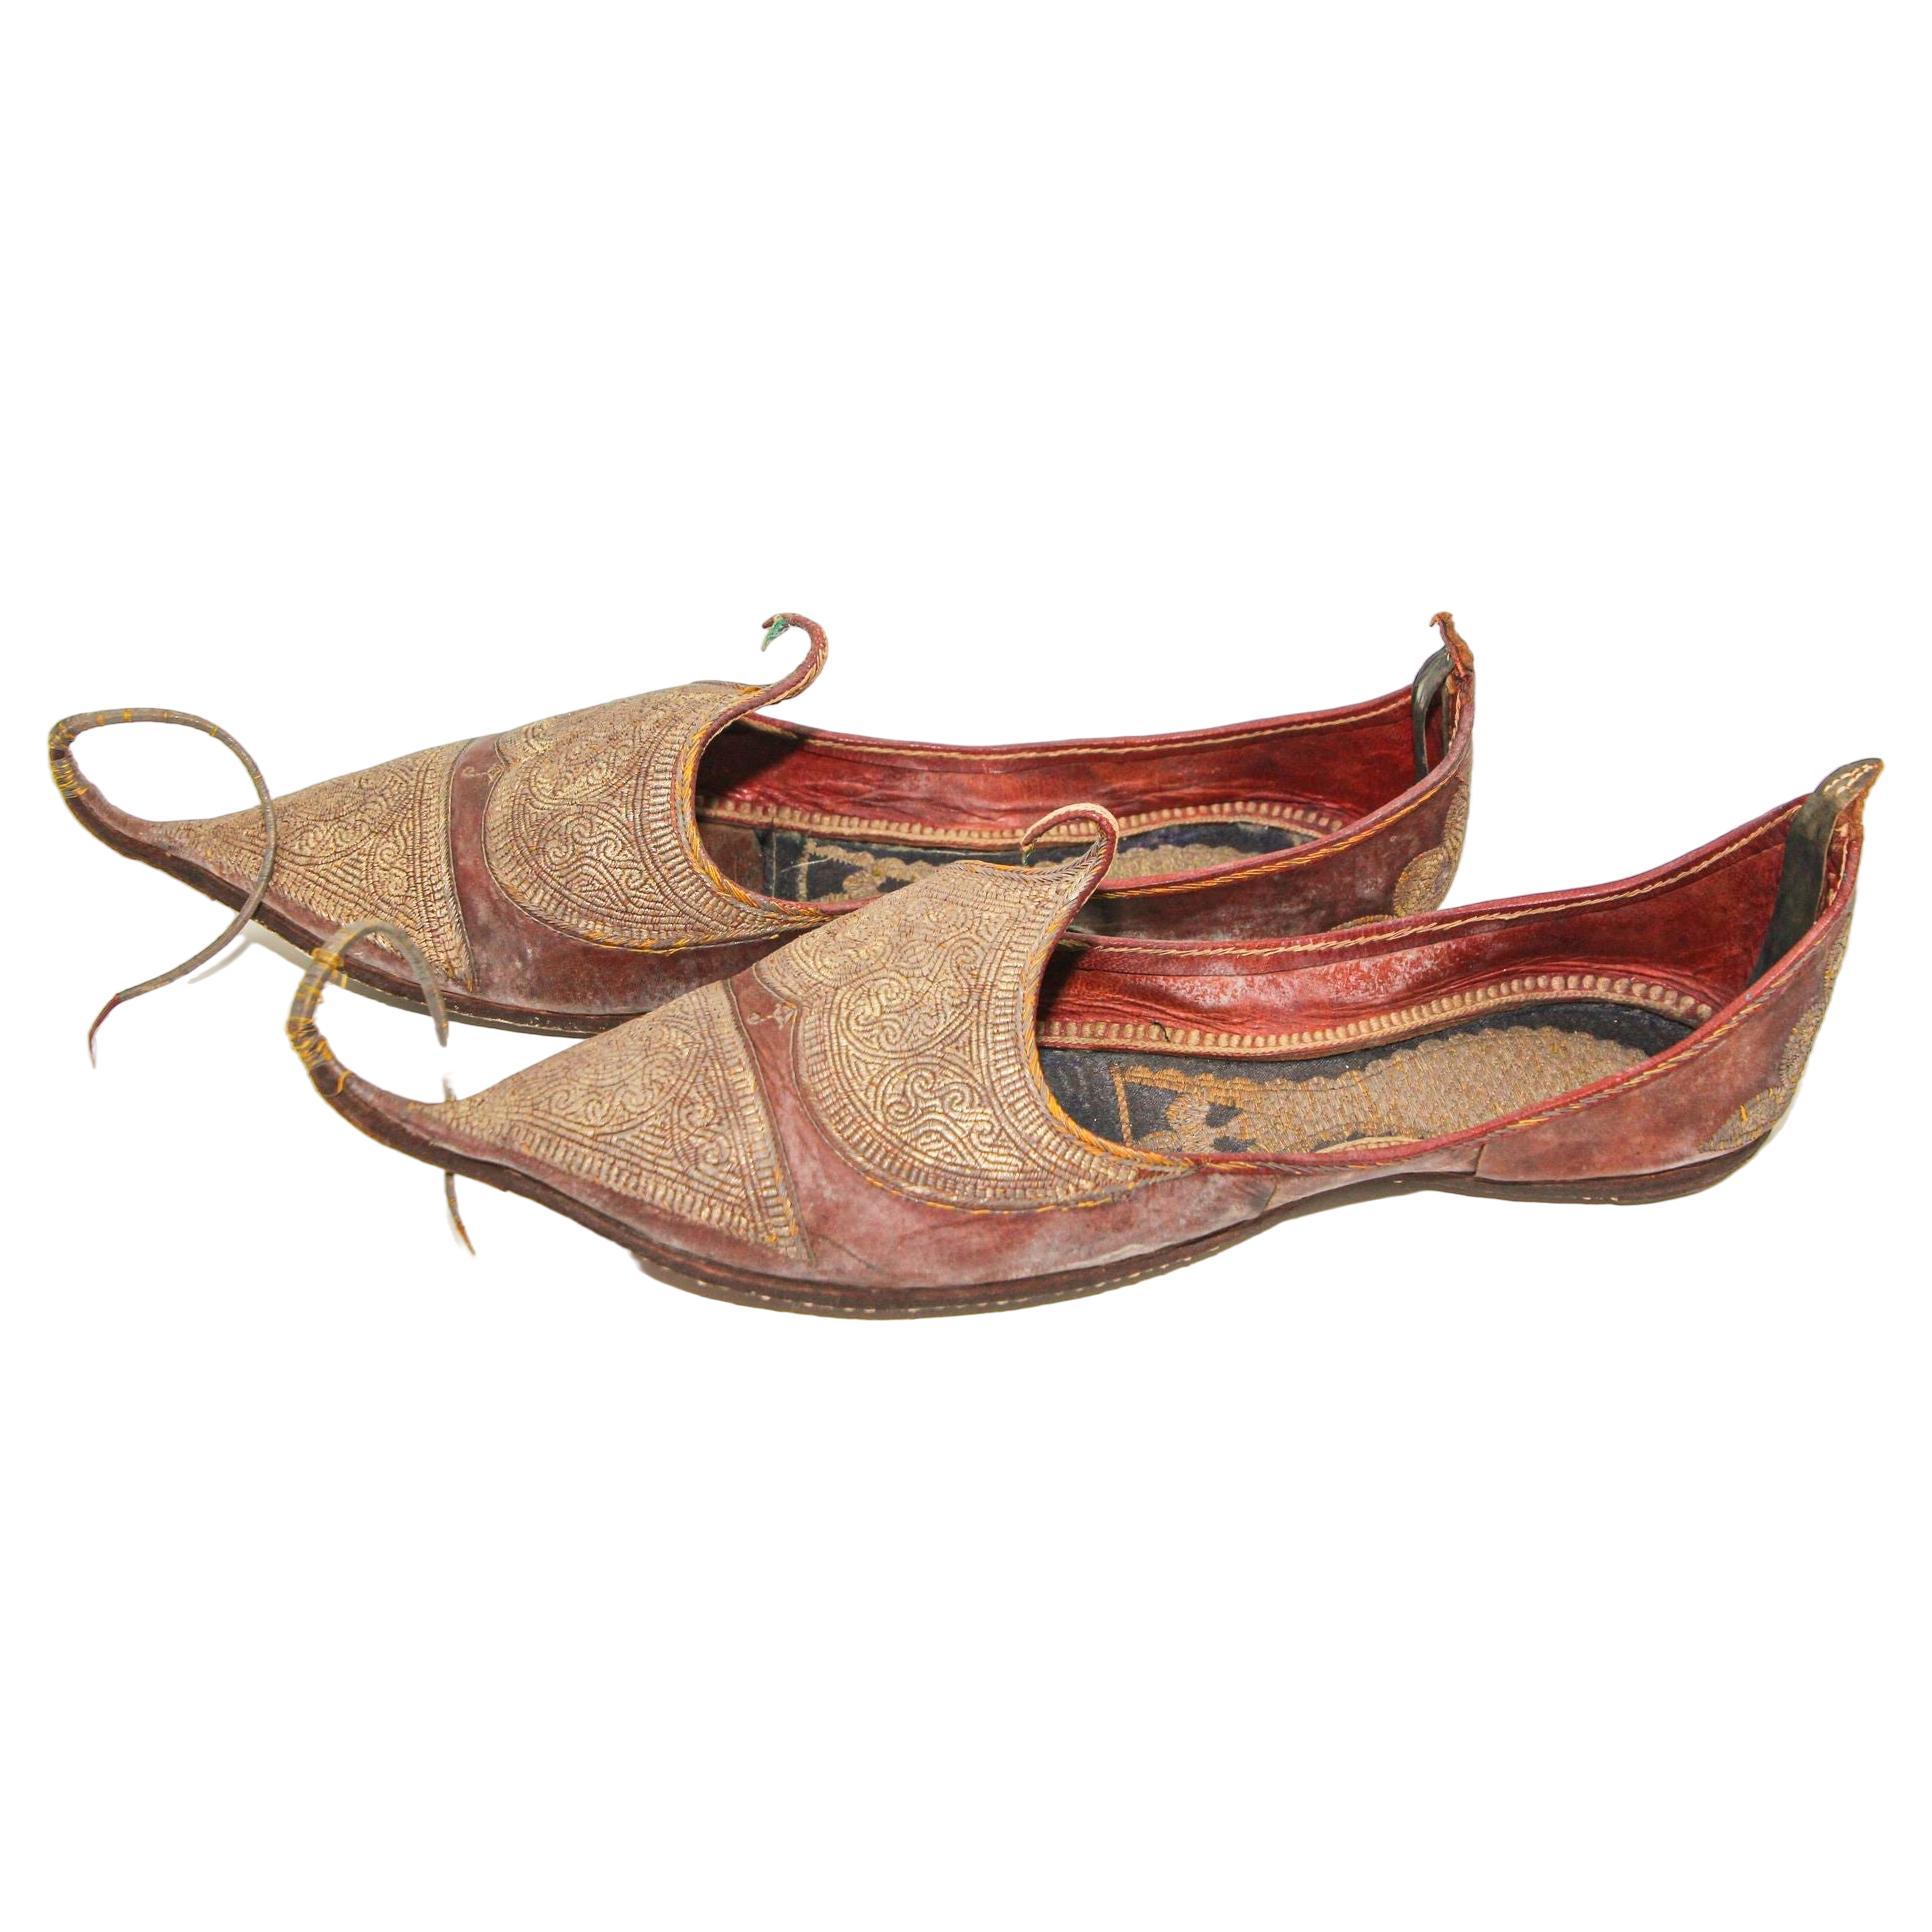 Chaussures mauresques moghol Raj ottomanes anciennes brodées d'or